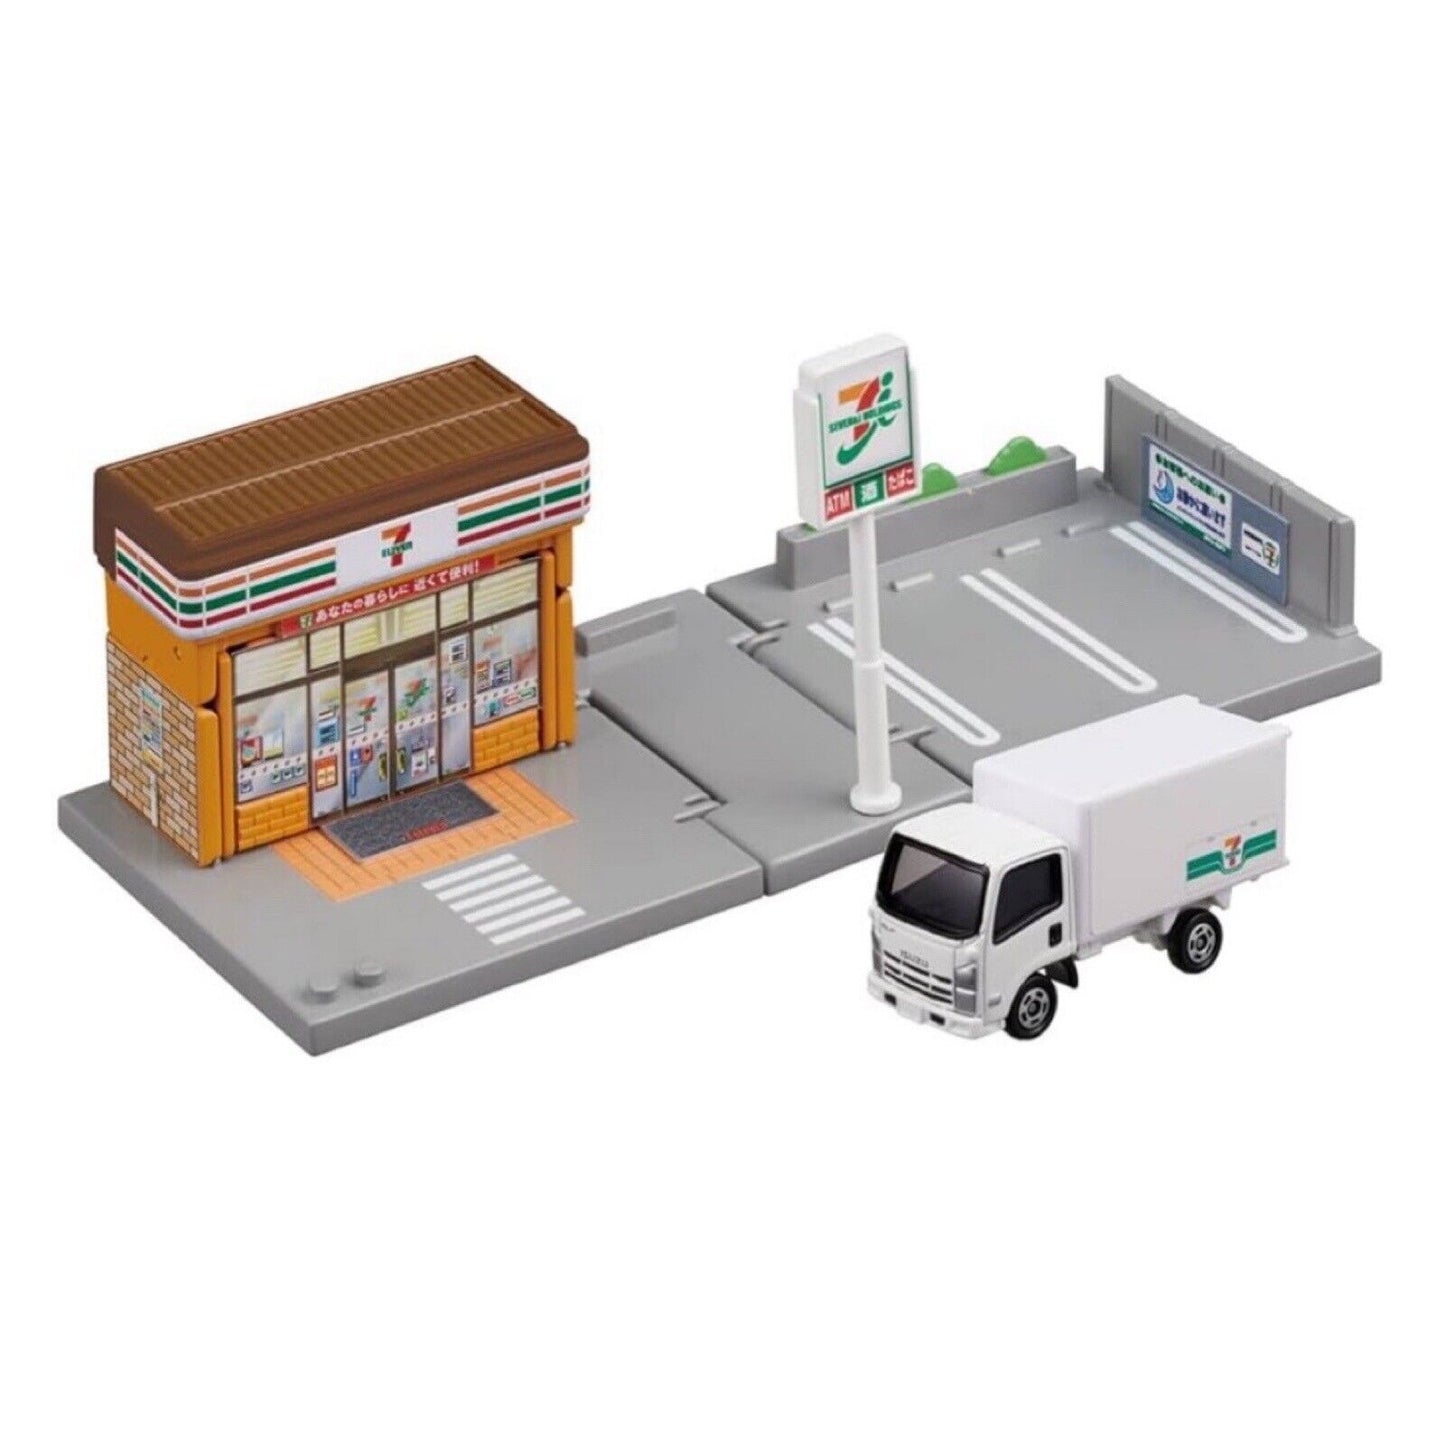 TOMICA Town - 7 Eleven Convenience Store & Isuzu Truck (Boxed) P61